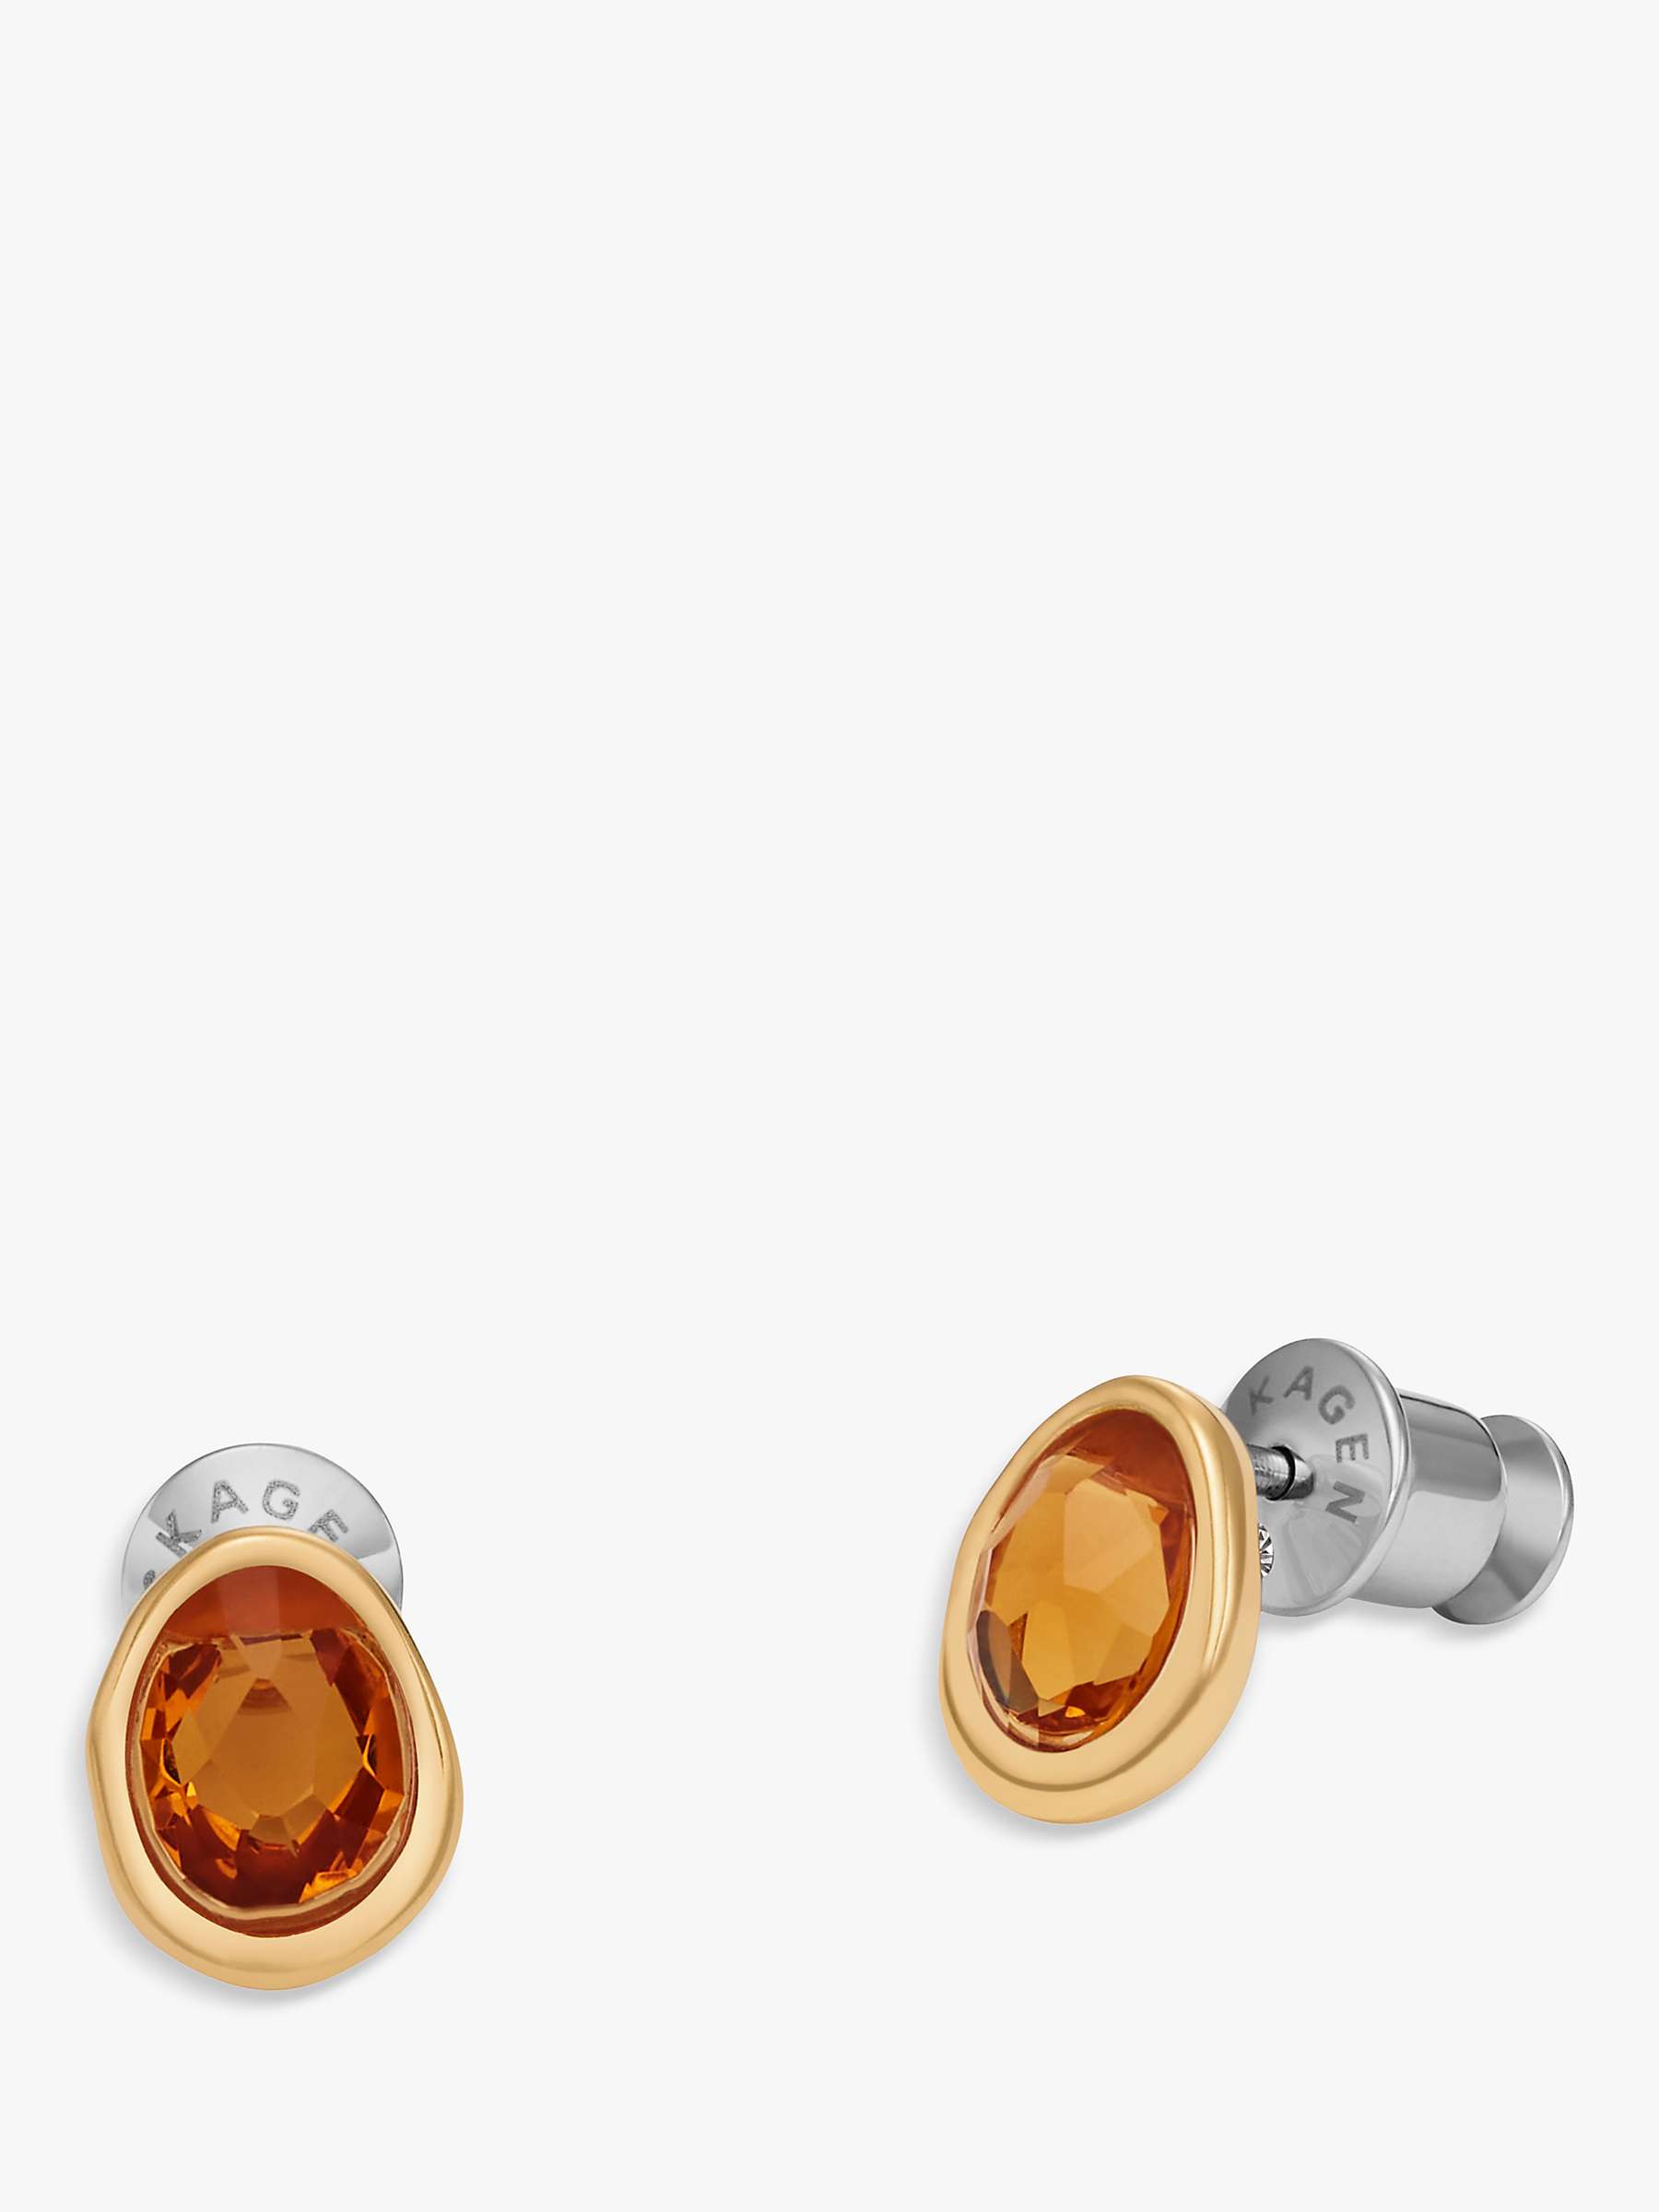 Buy Skagen Glass Stud Earrings, Gold Online at johnlewis.com